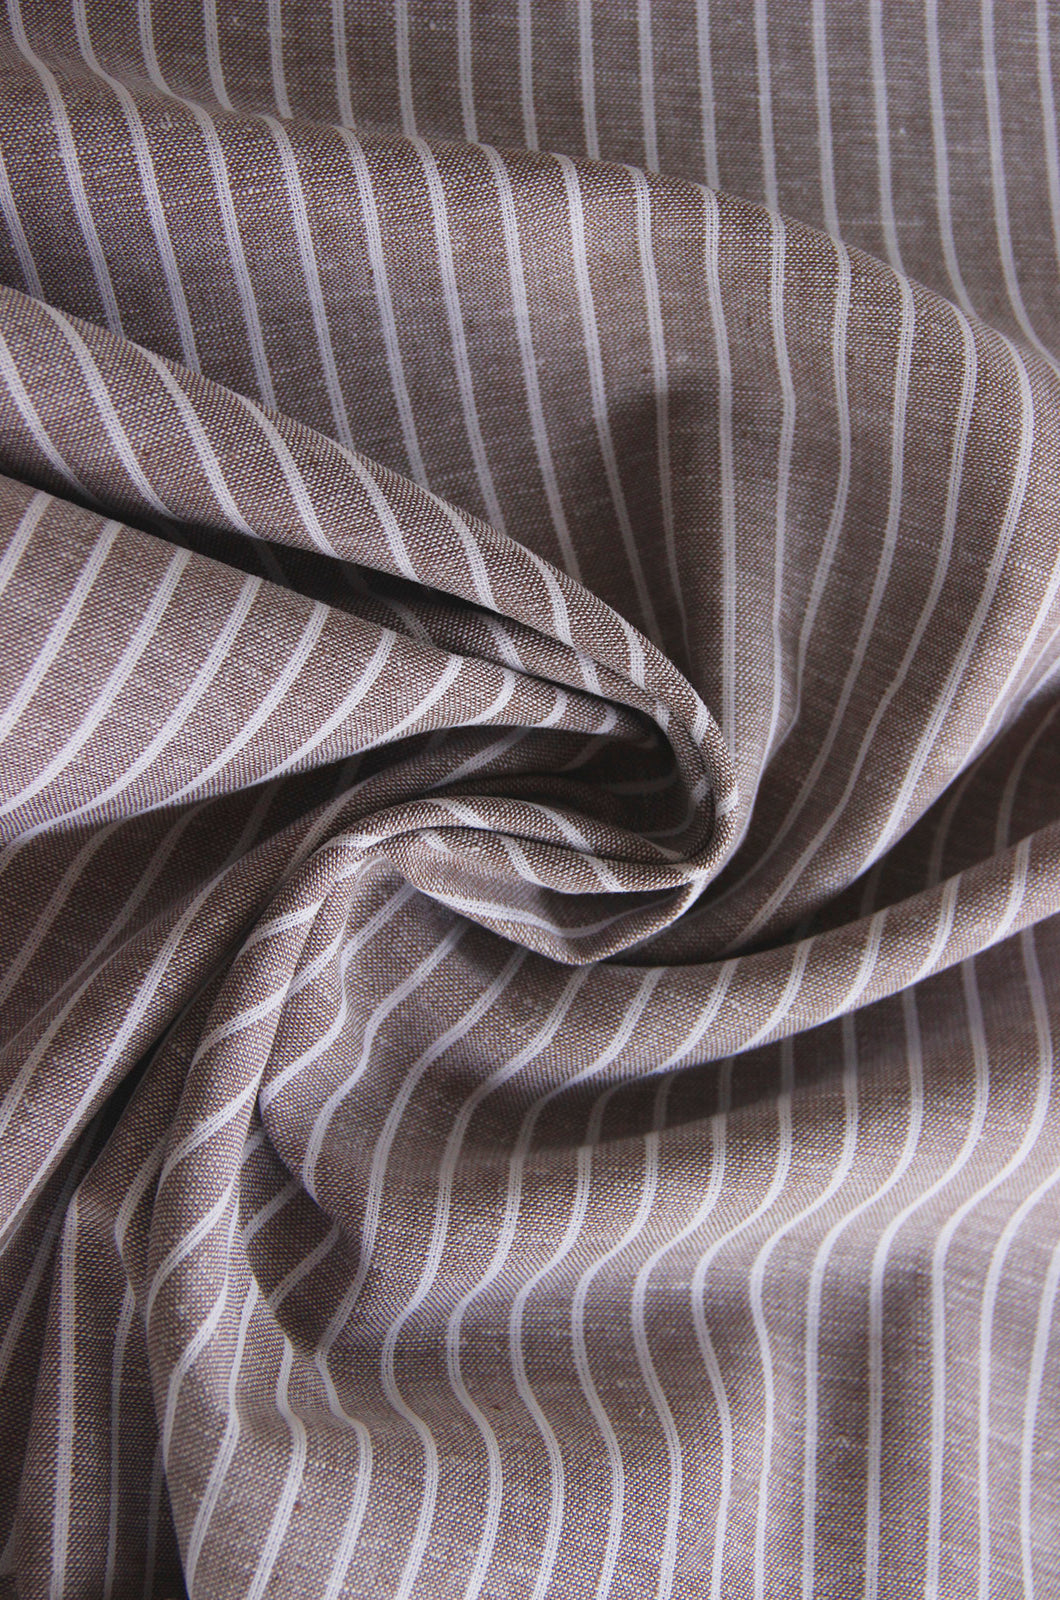 Buy 052-light-brown Half linen patterned stripes * From 50 cm